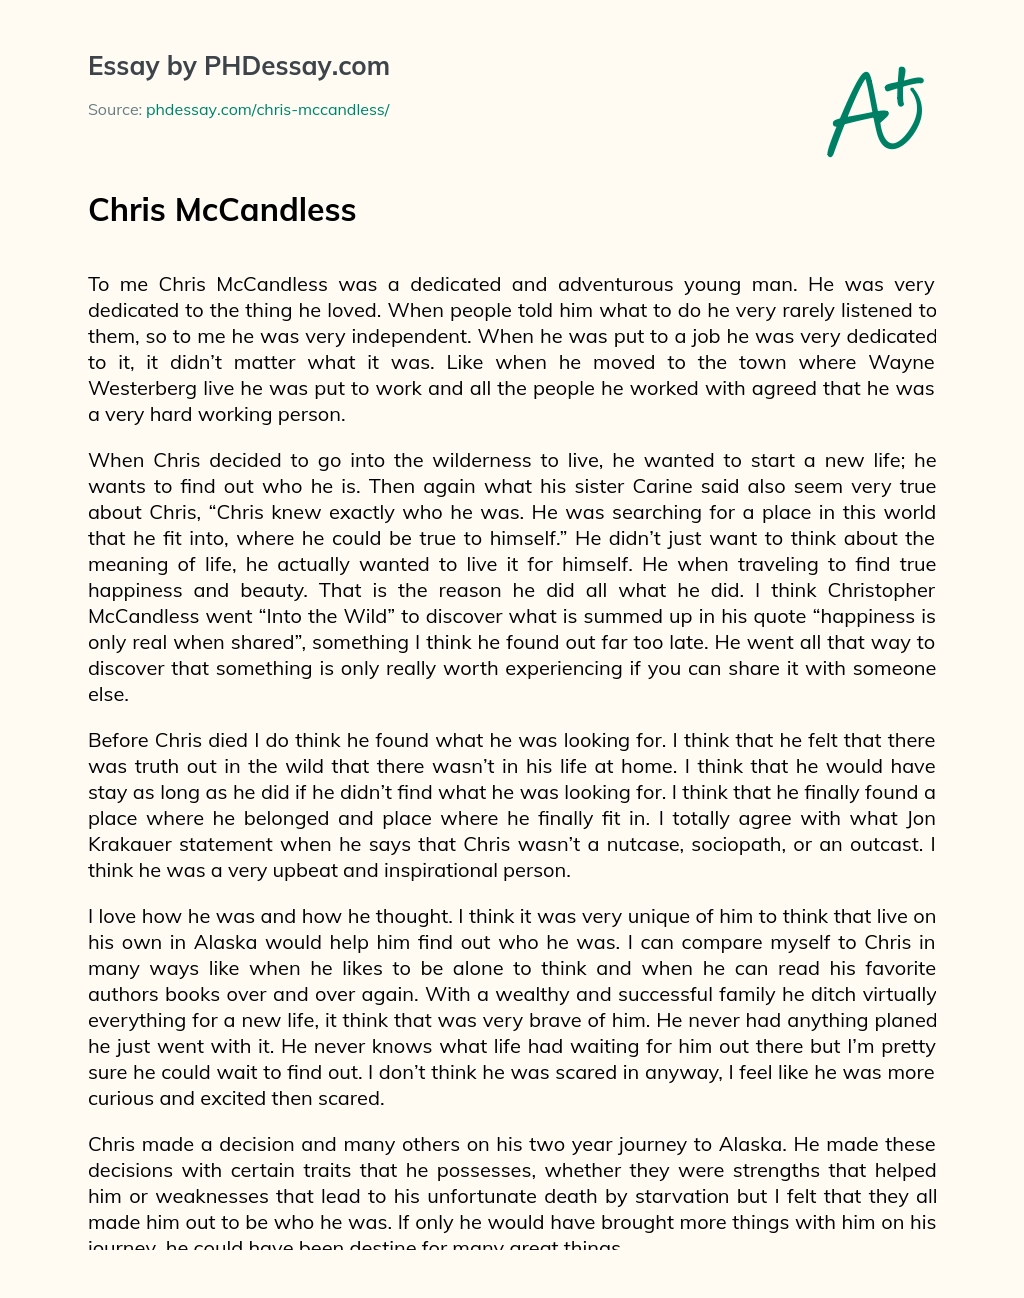 Chris McCandless essay